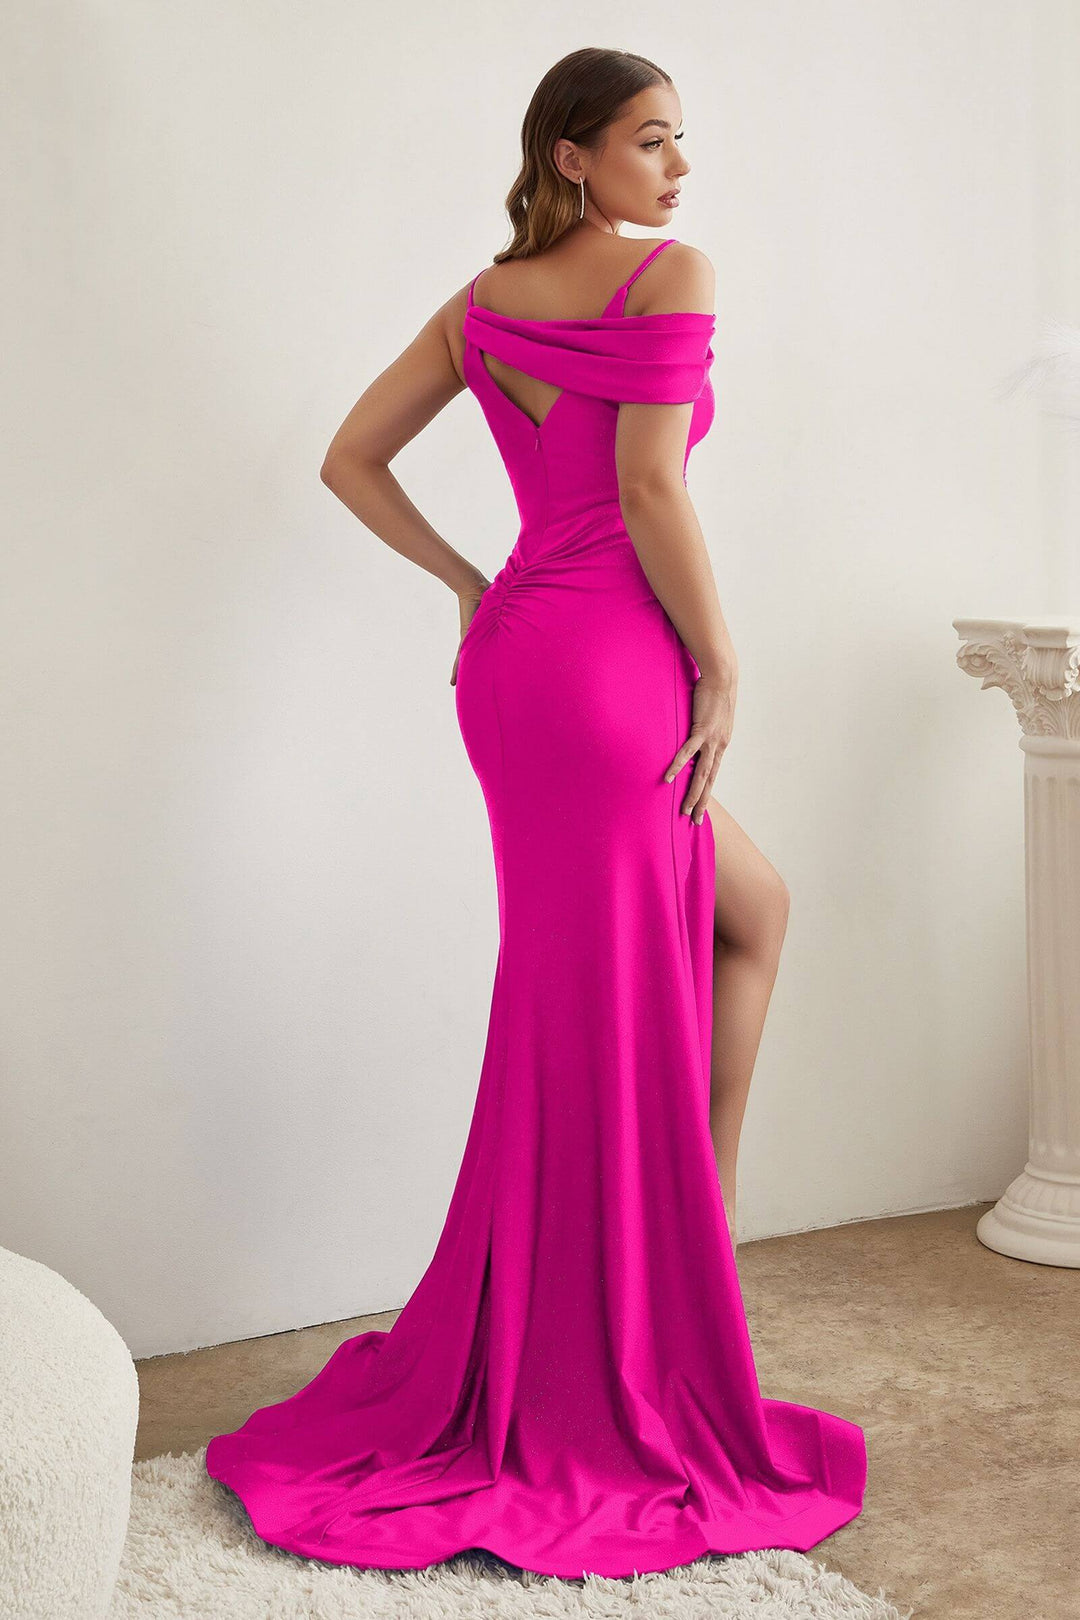 Assymetrical Shoulder V-neck Glittery Bodice Sexy Stretch satin Evening Gala Red Carpet Glittery Formal Prom Dress CDCD881 | Shangri-La Fashion